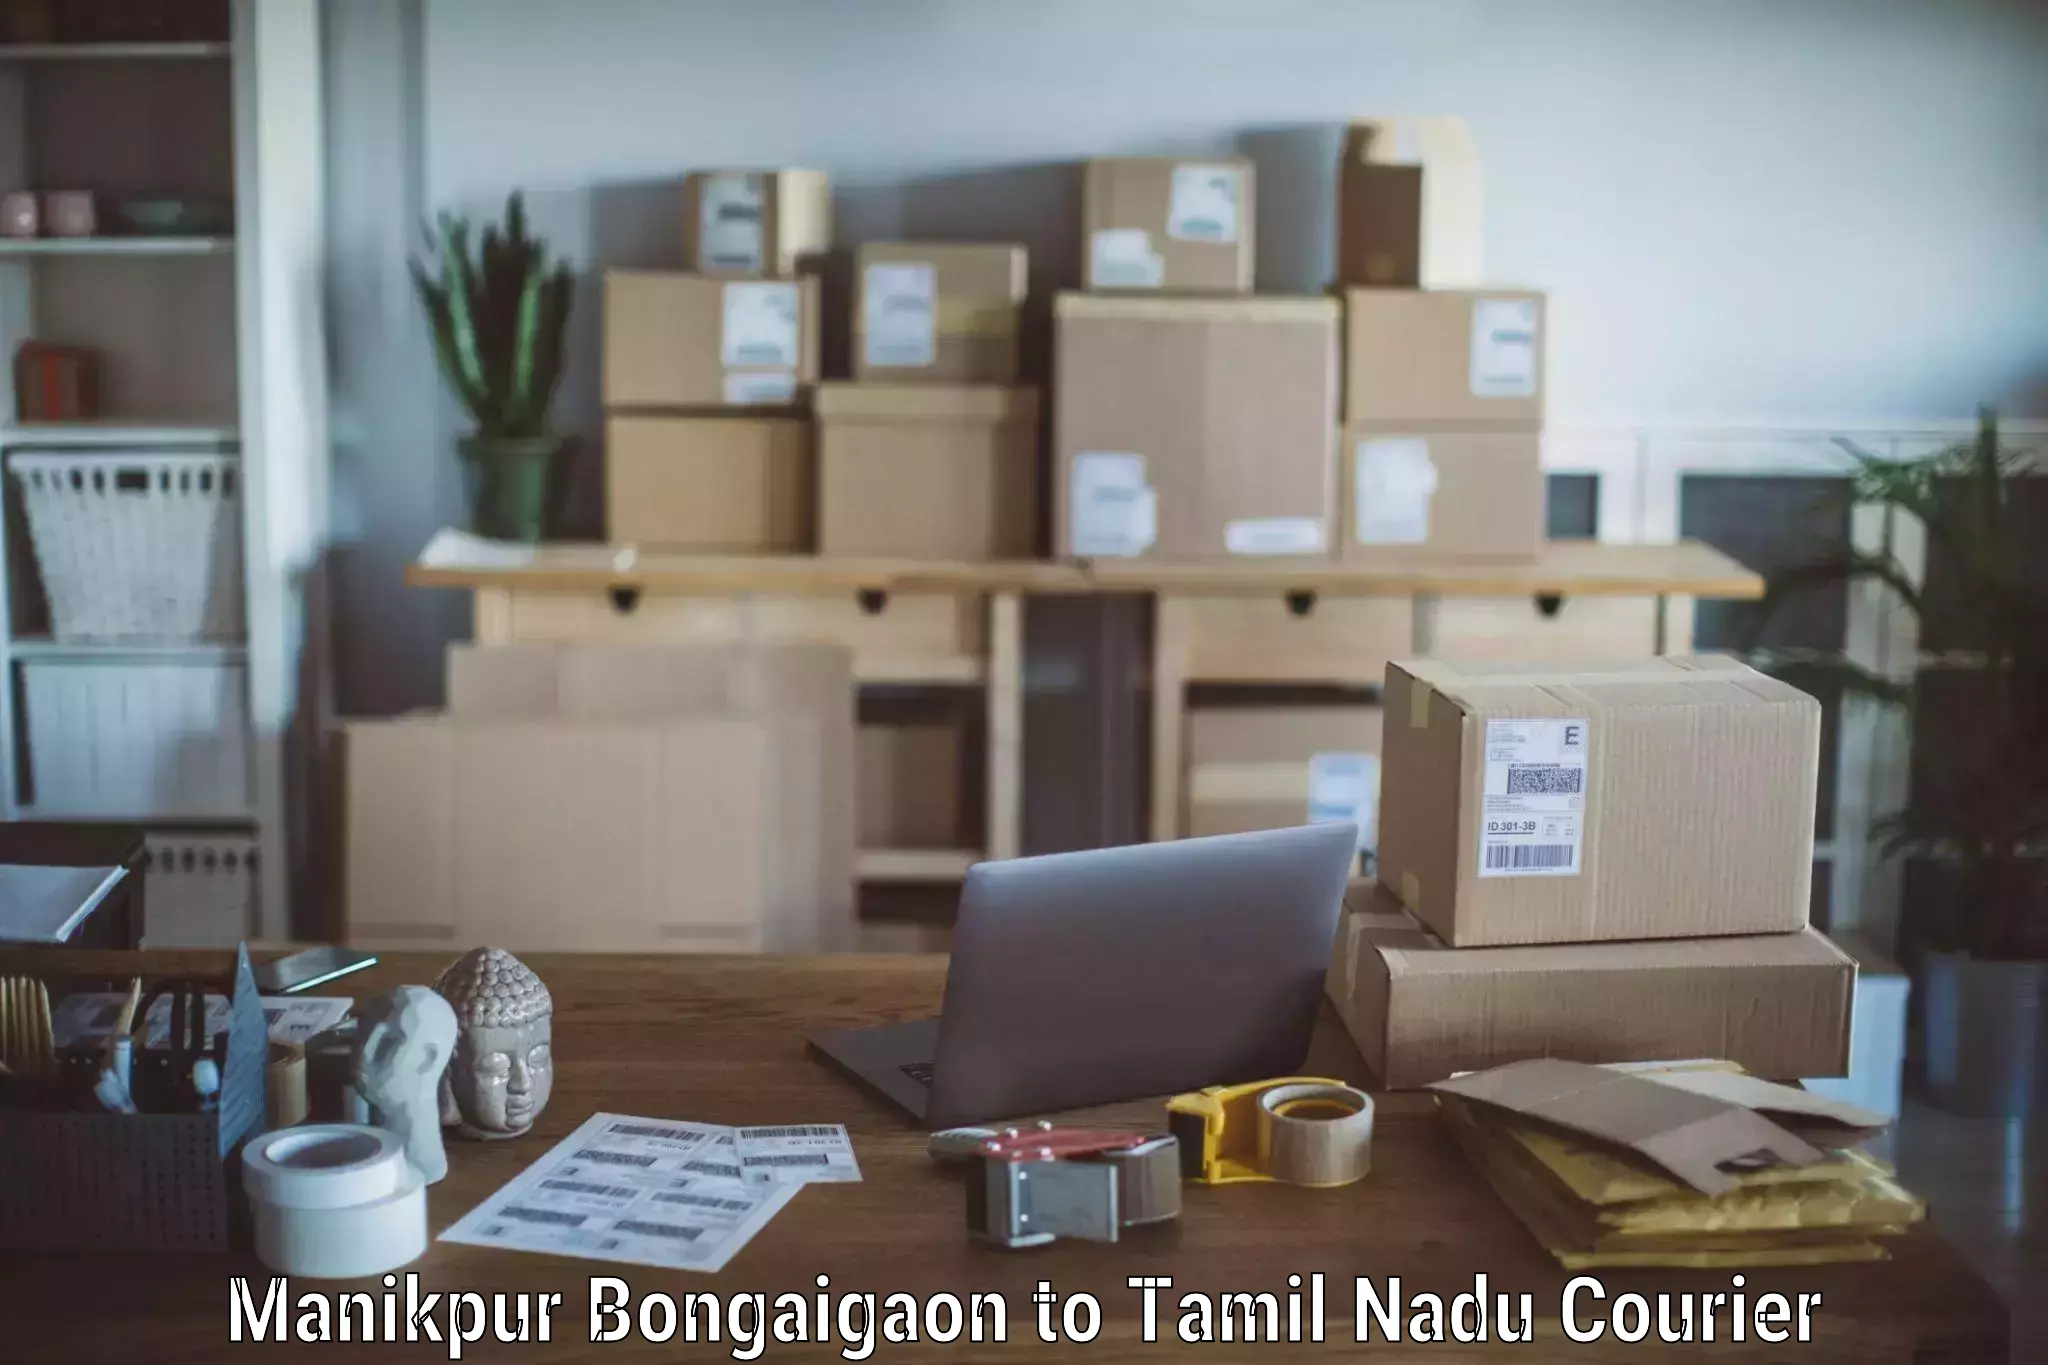 Professional movers and packers Manikpur Bongaigaon to Madurai